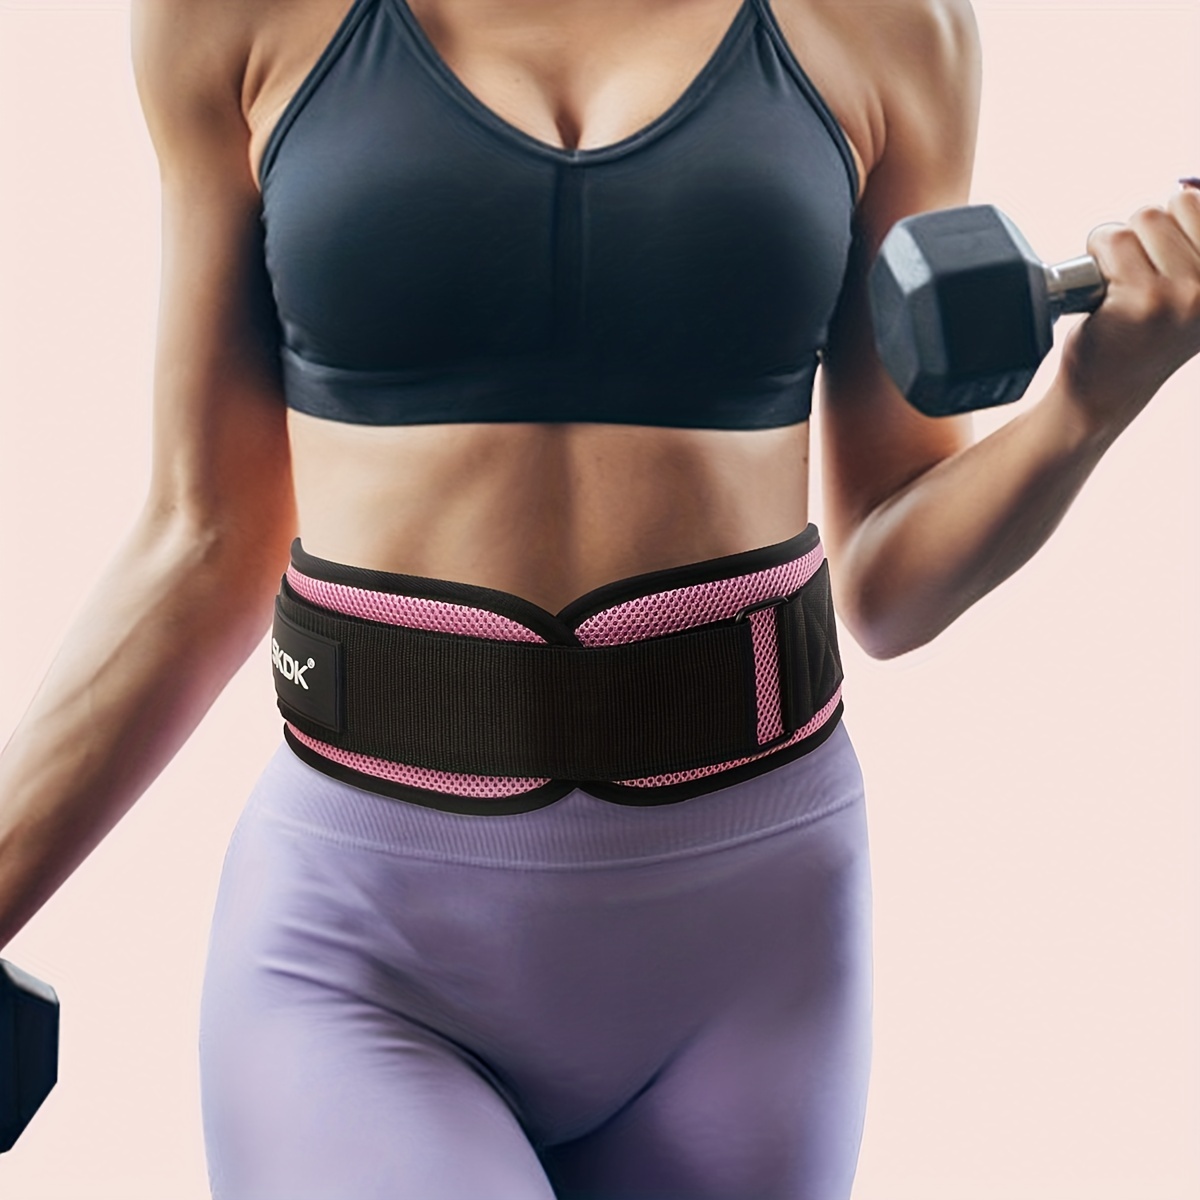 Weightlifting Belt Gym Accessories For Women Back Support Gym Belt